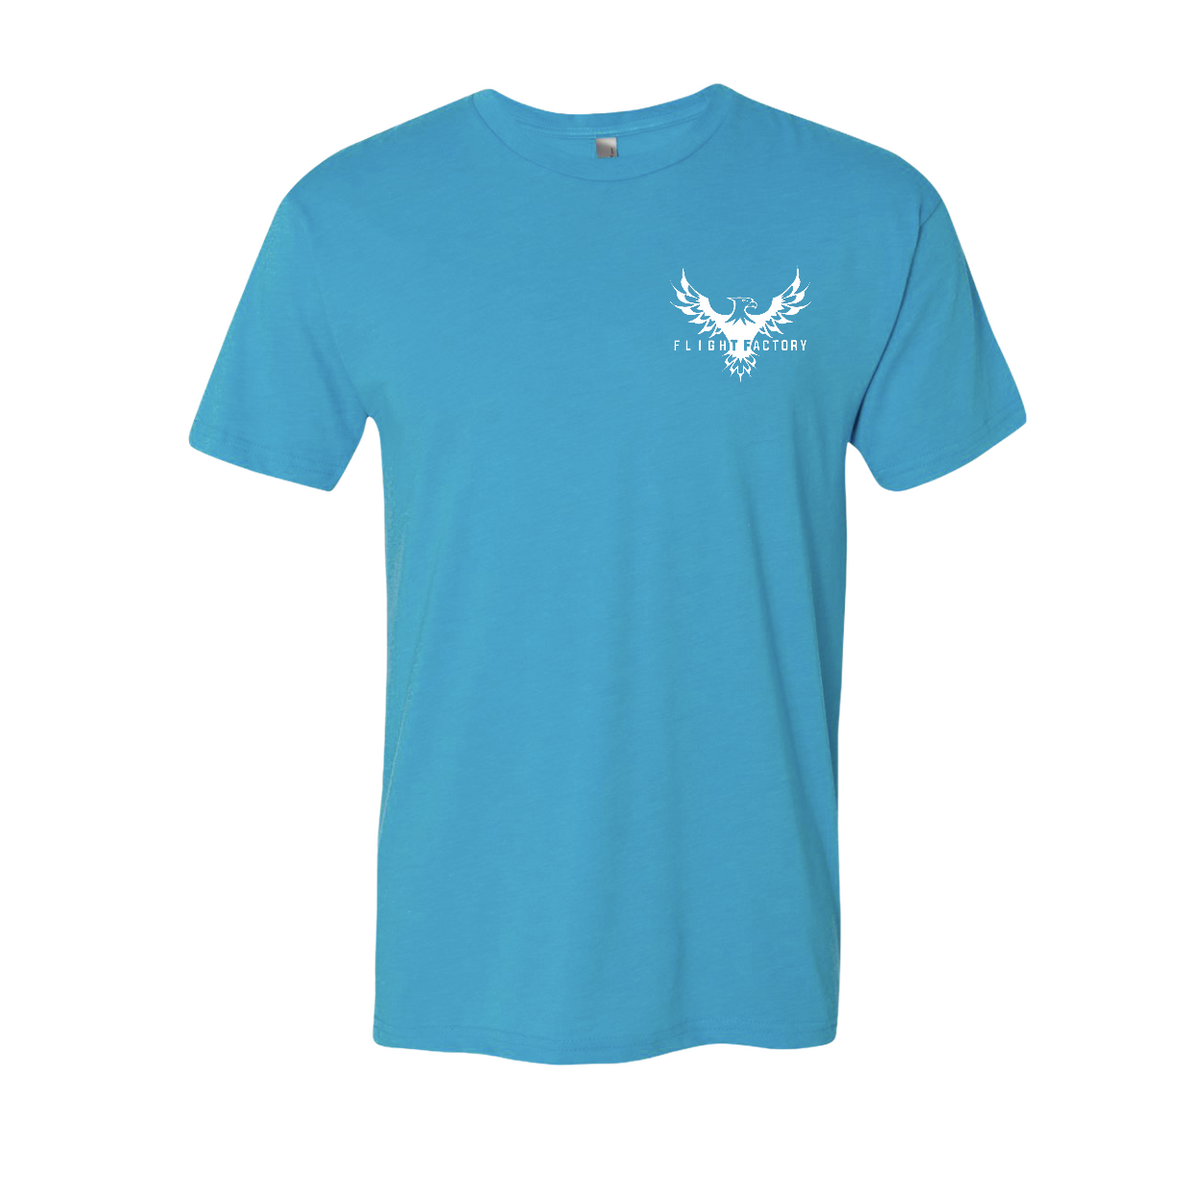 Flight Factory Eagle Tri-Blend T-Shirt